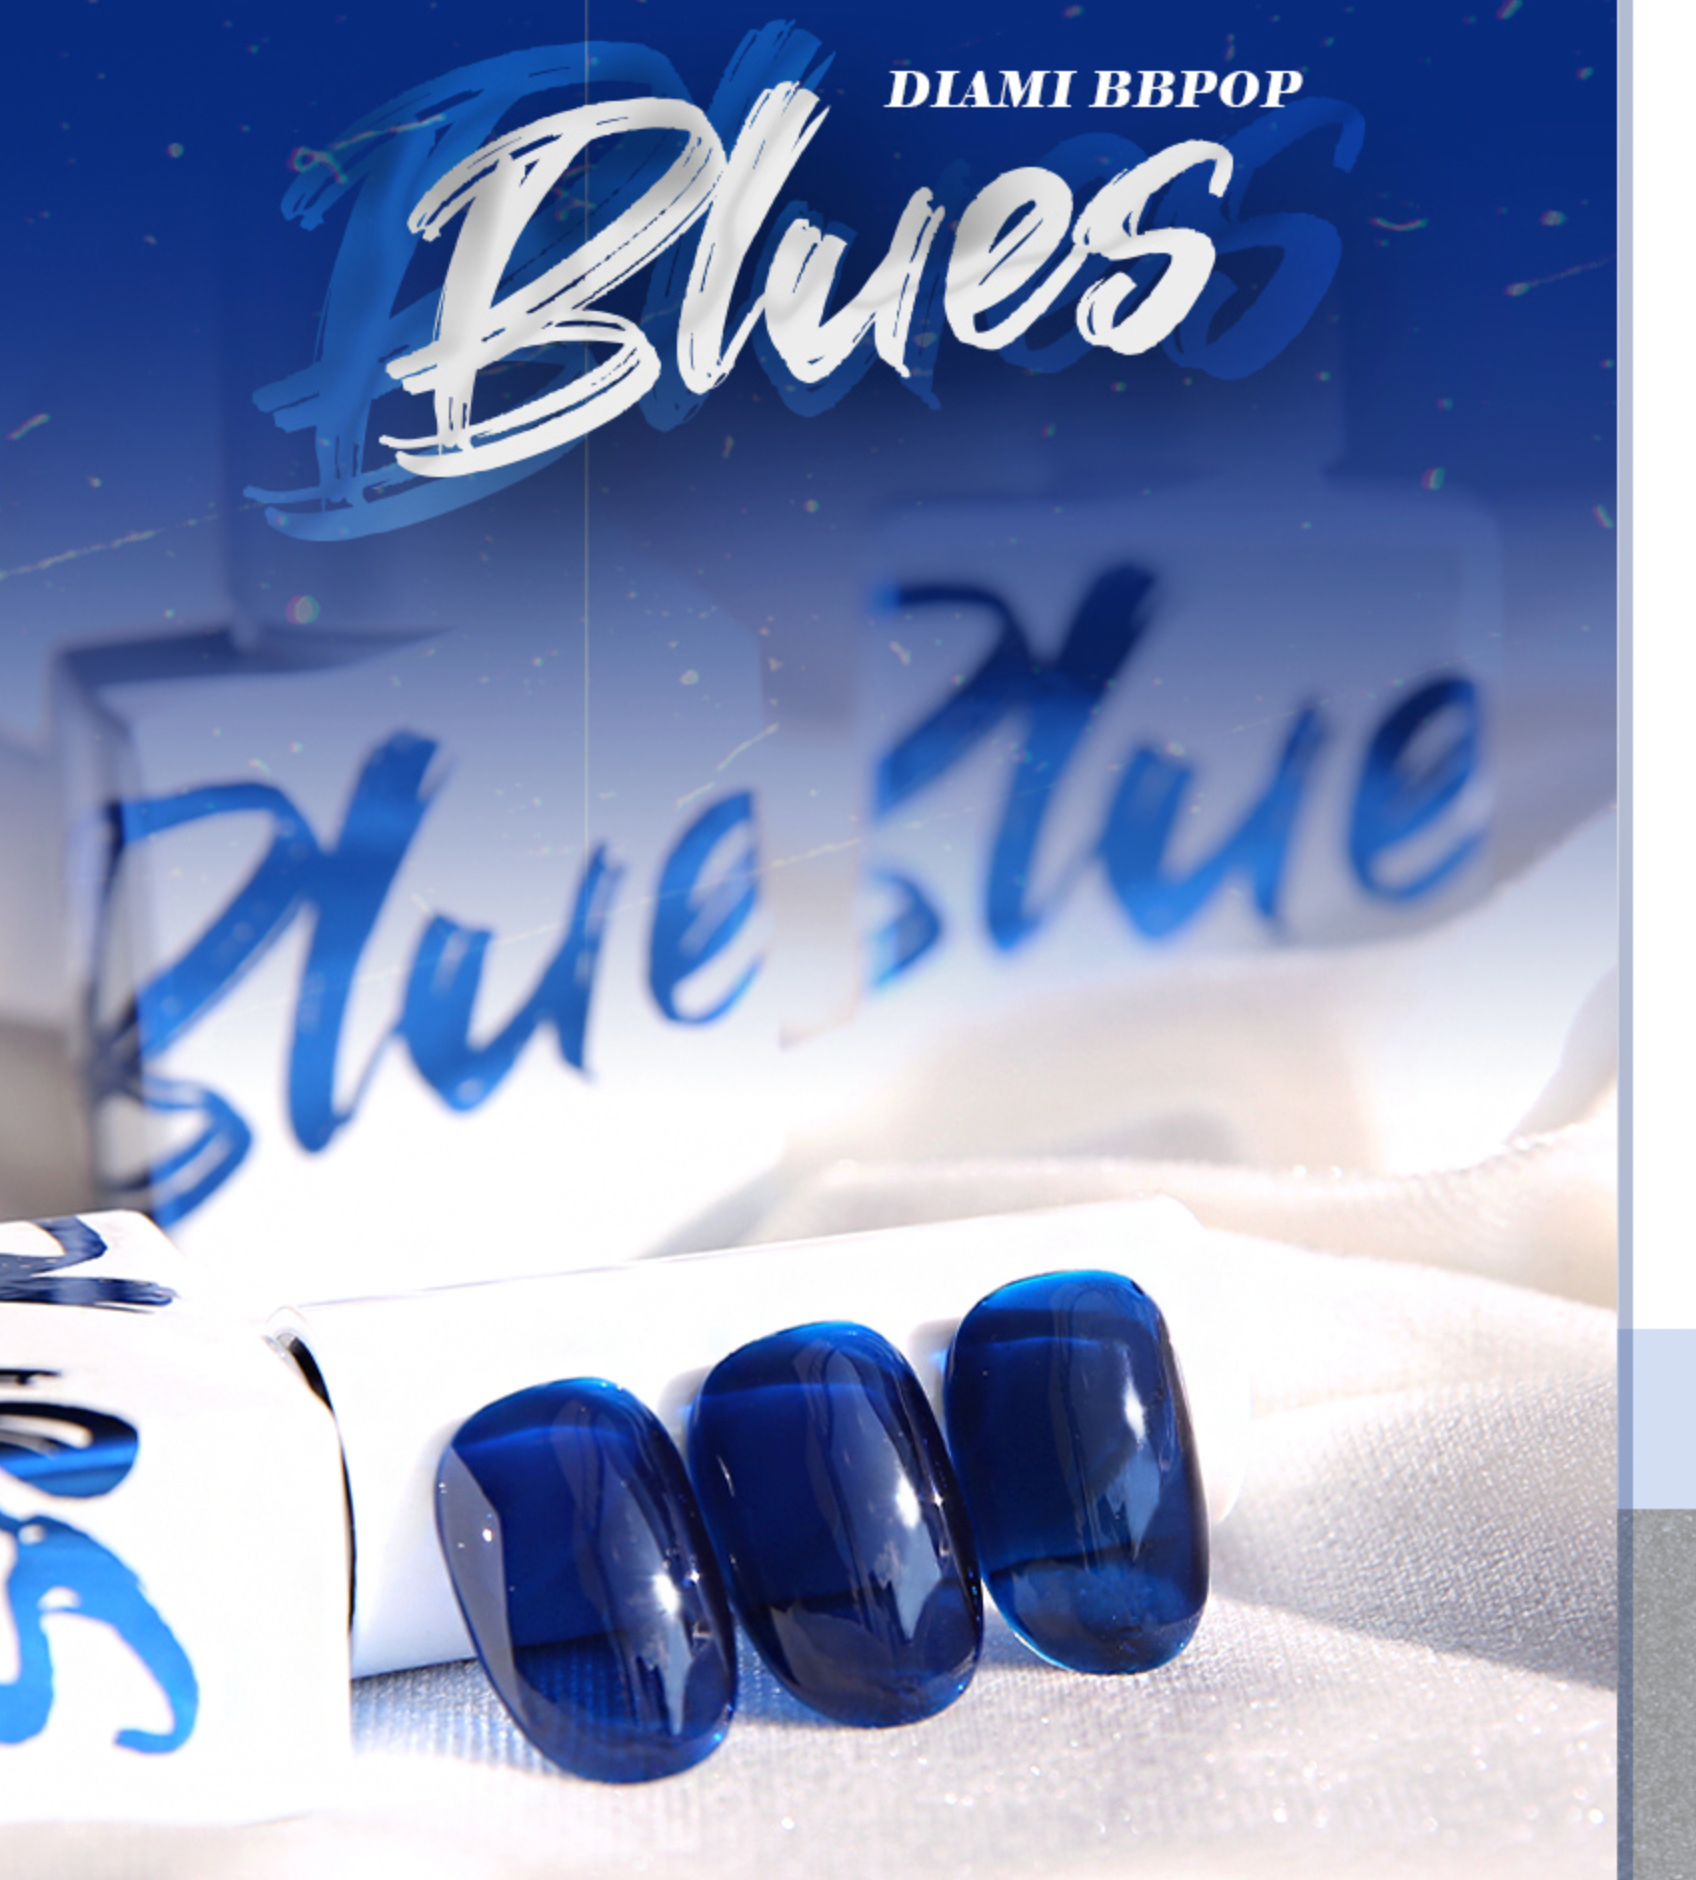 DIAMI BB Pop Blues - the perfect blue